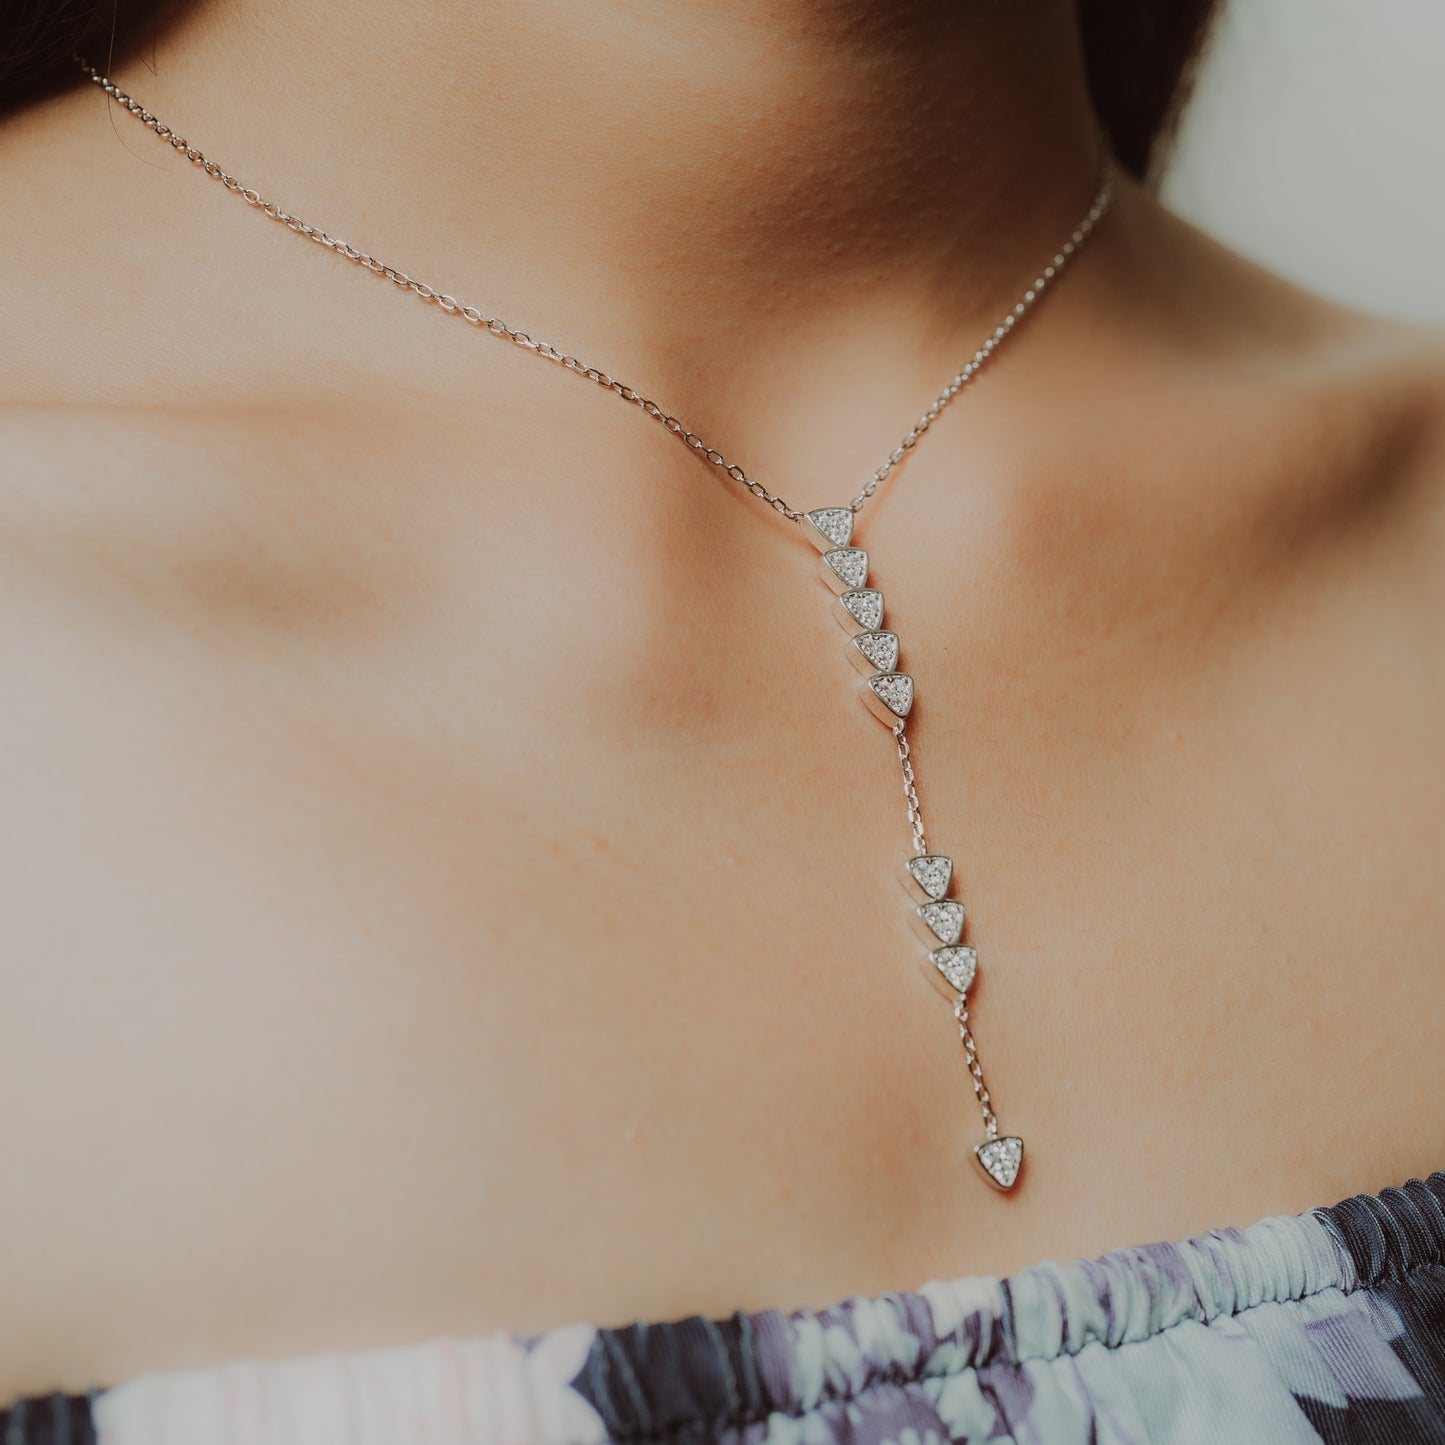 Silver Stellar Cascade Necklace.